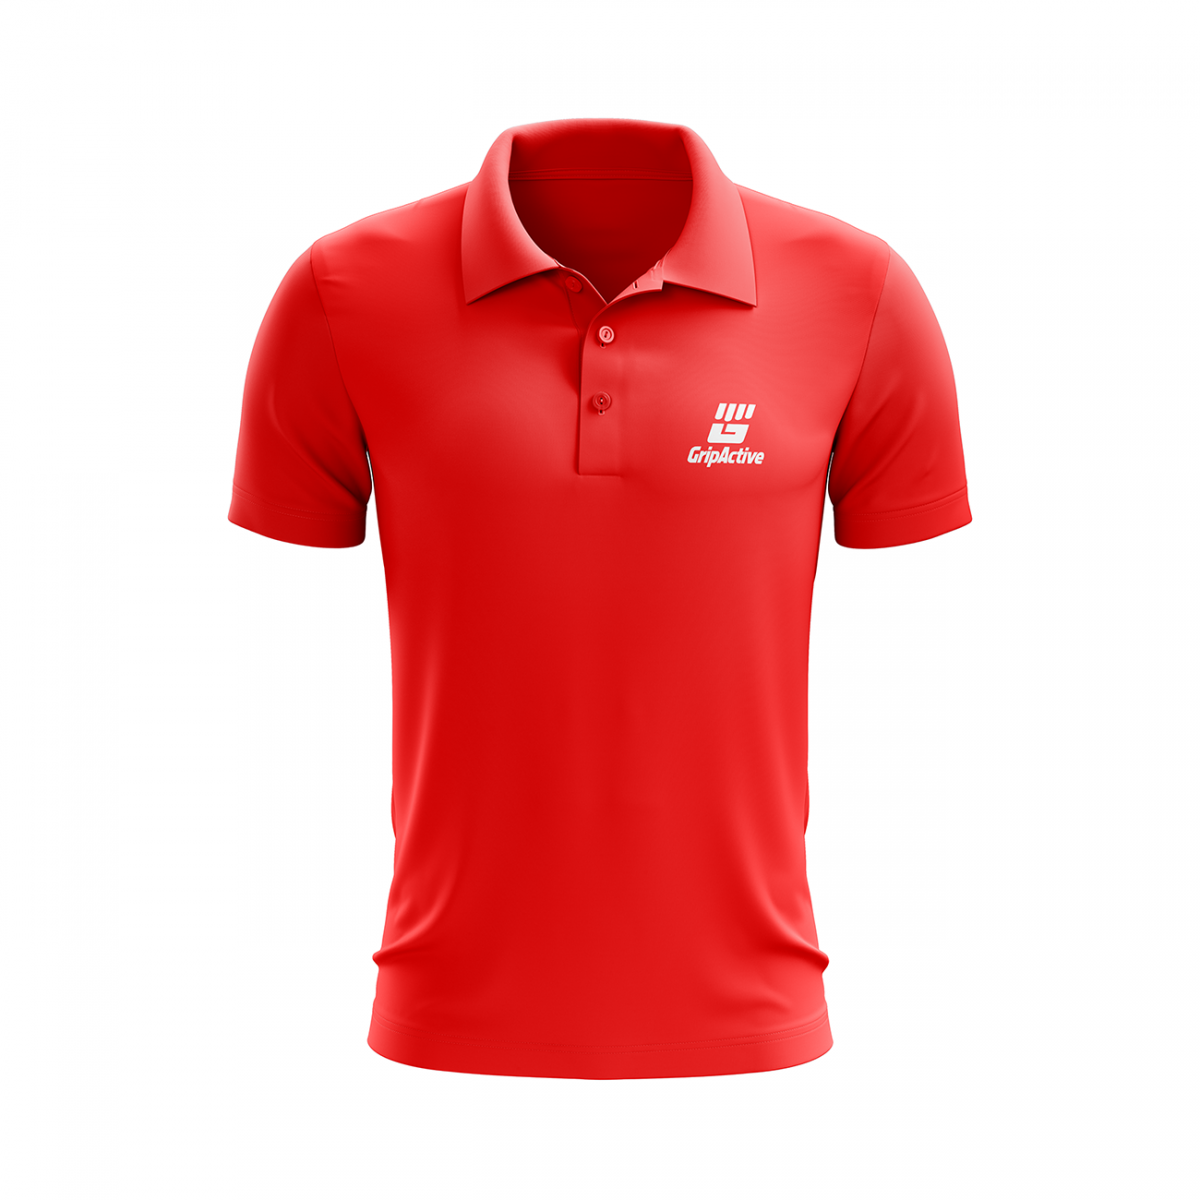 grip active red colour custom workwear polo shirt